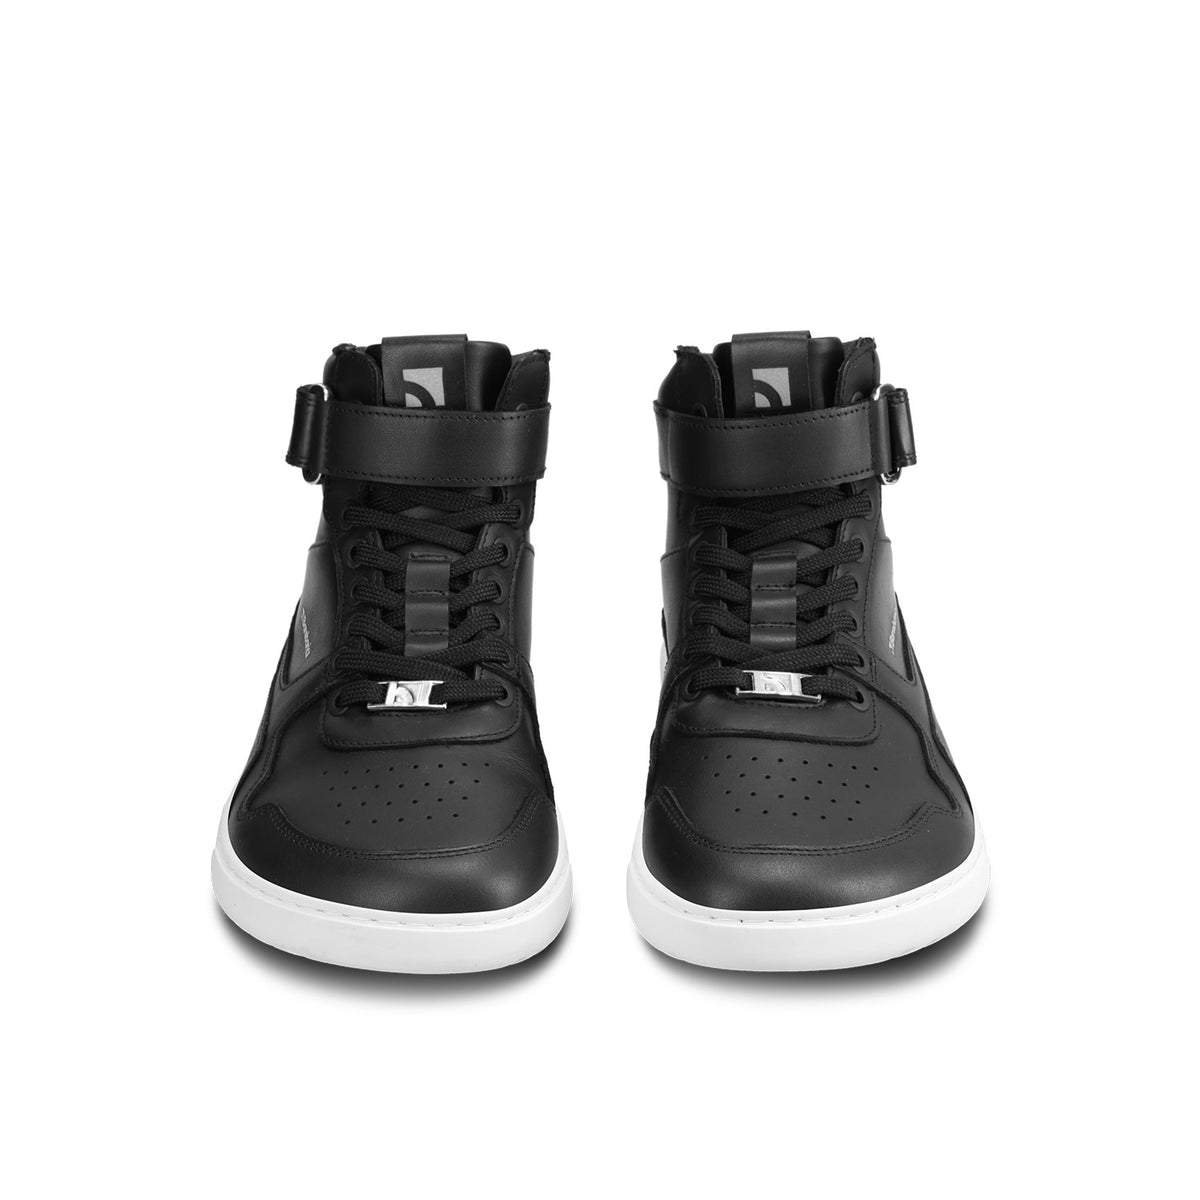 Barefoot Sneakers Barebarics Zing - High Top - Black & White - Leather 4  - OzBarefoot